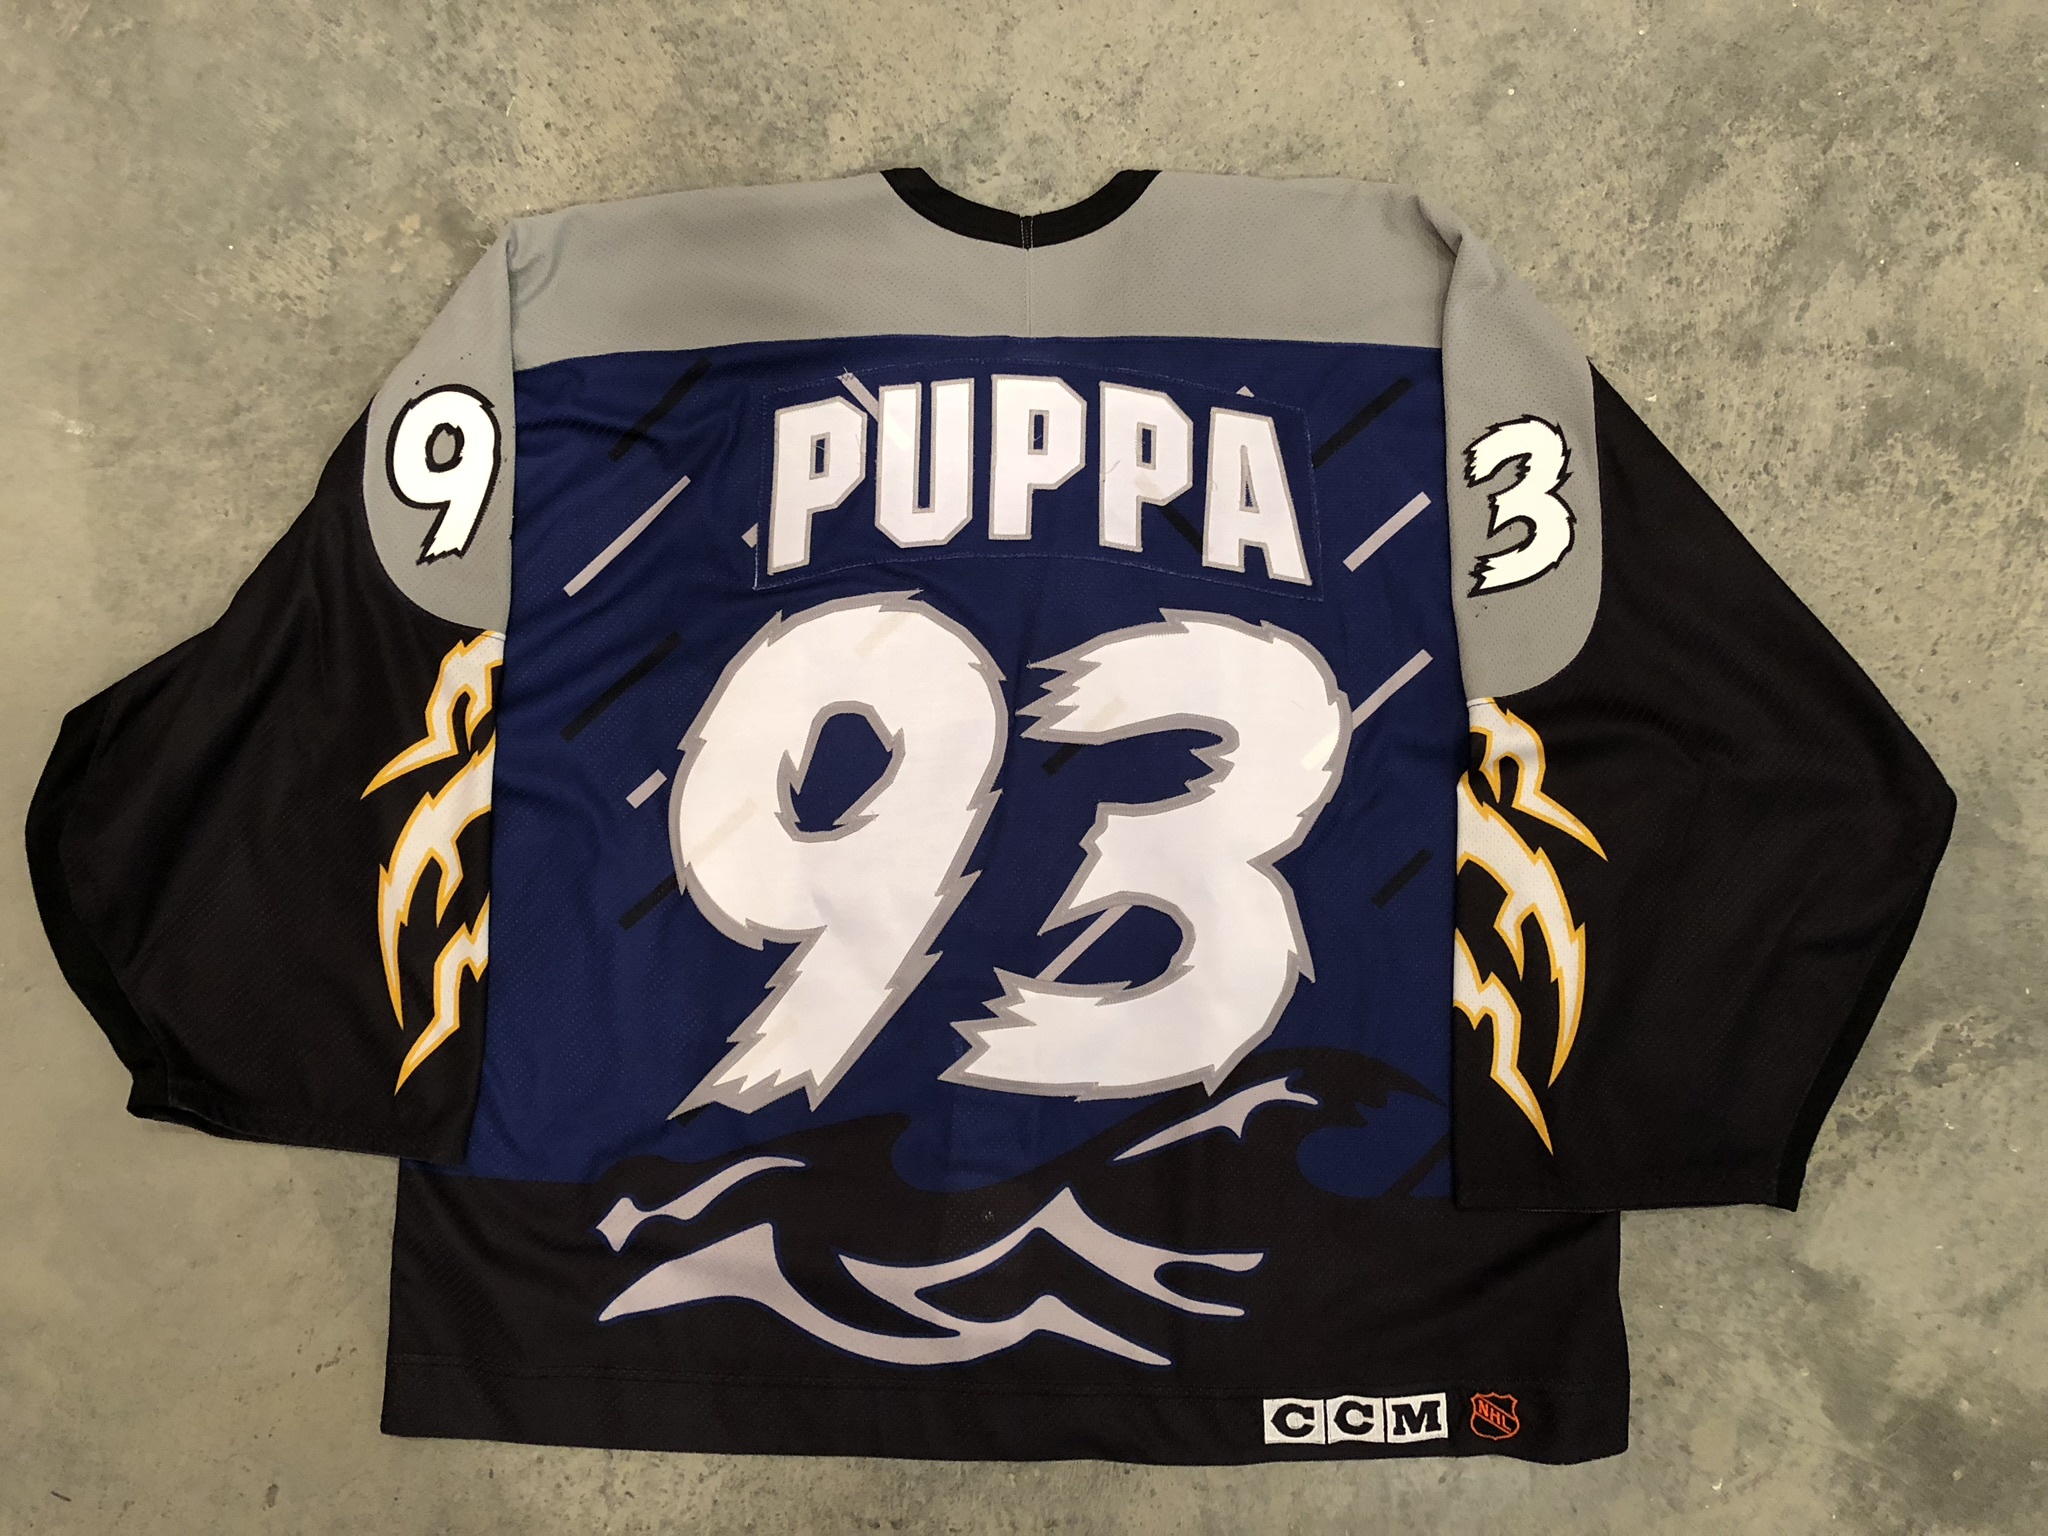 NHL Tampa Bay Lightning 1998-99 uniform and jersey original art